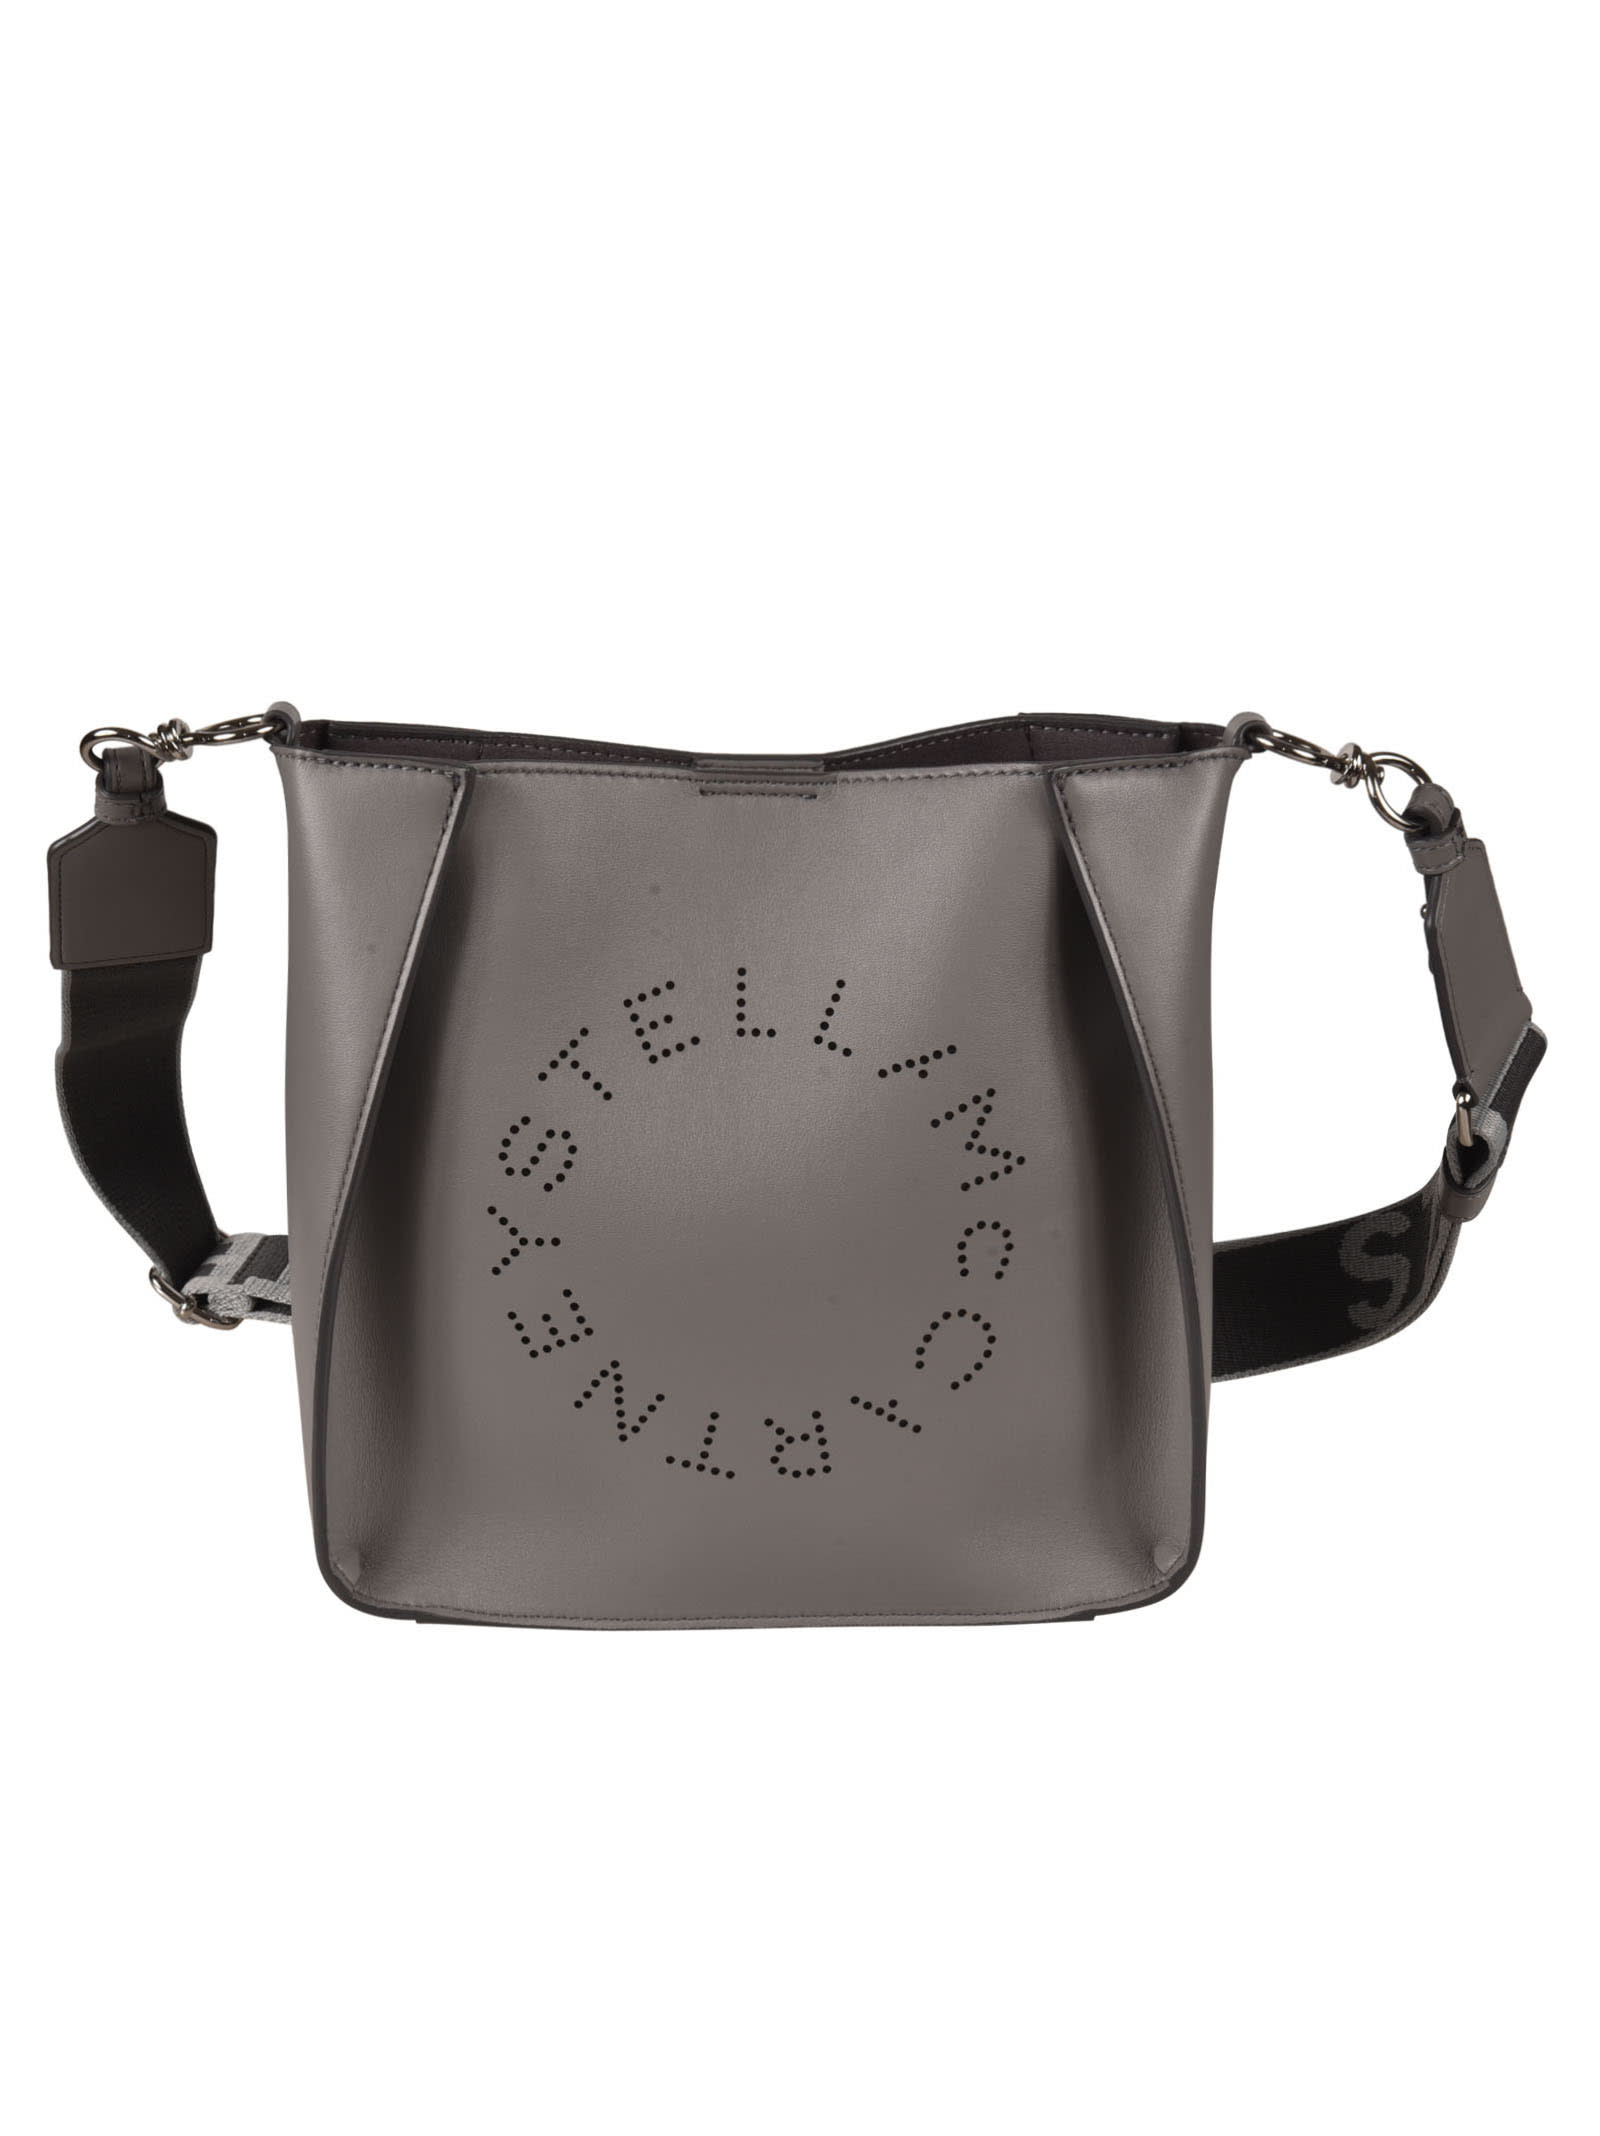 Stella McCartney Classic Mini Shoulder Bag